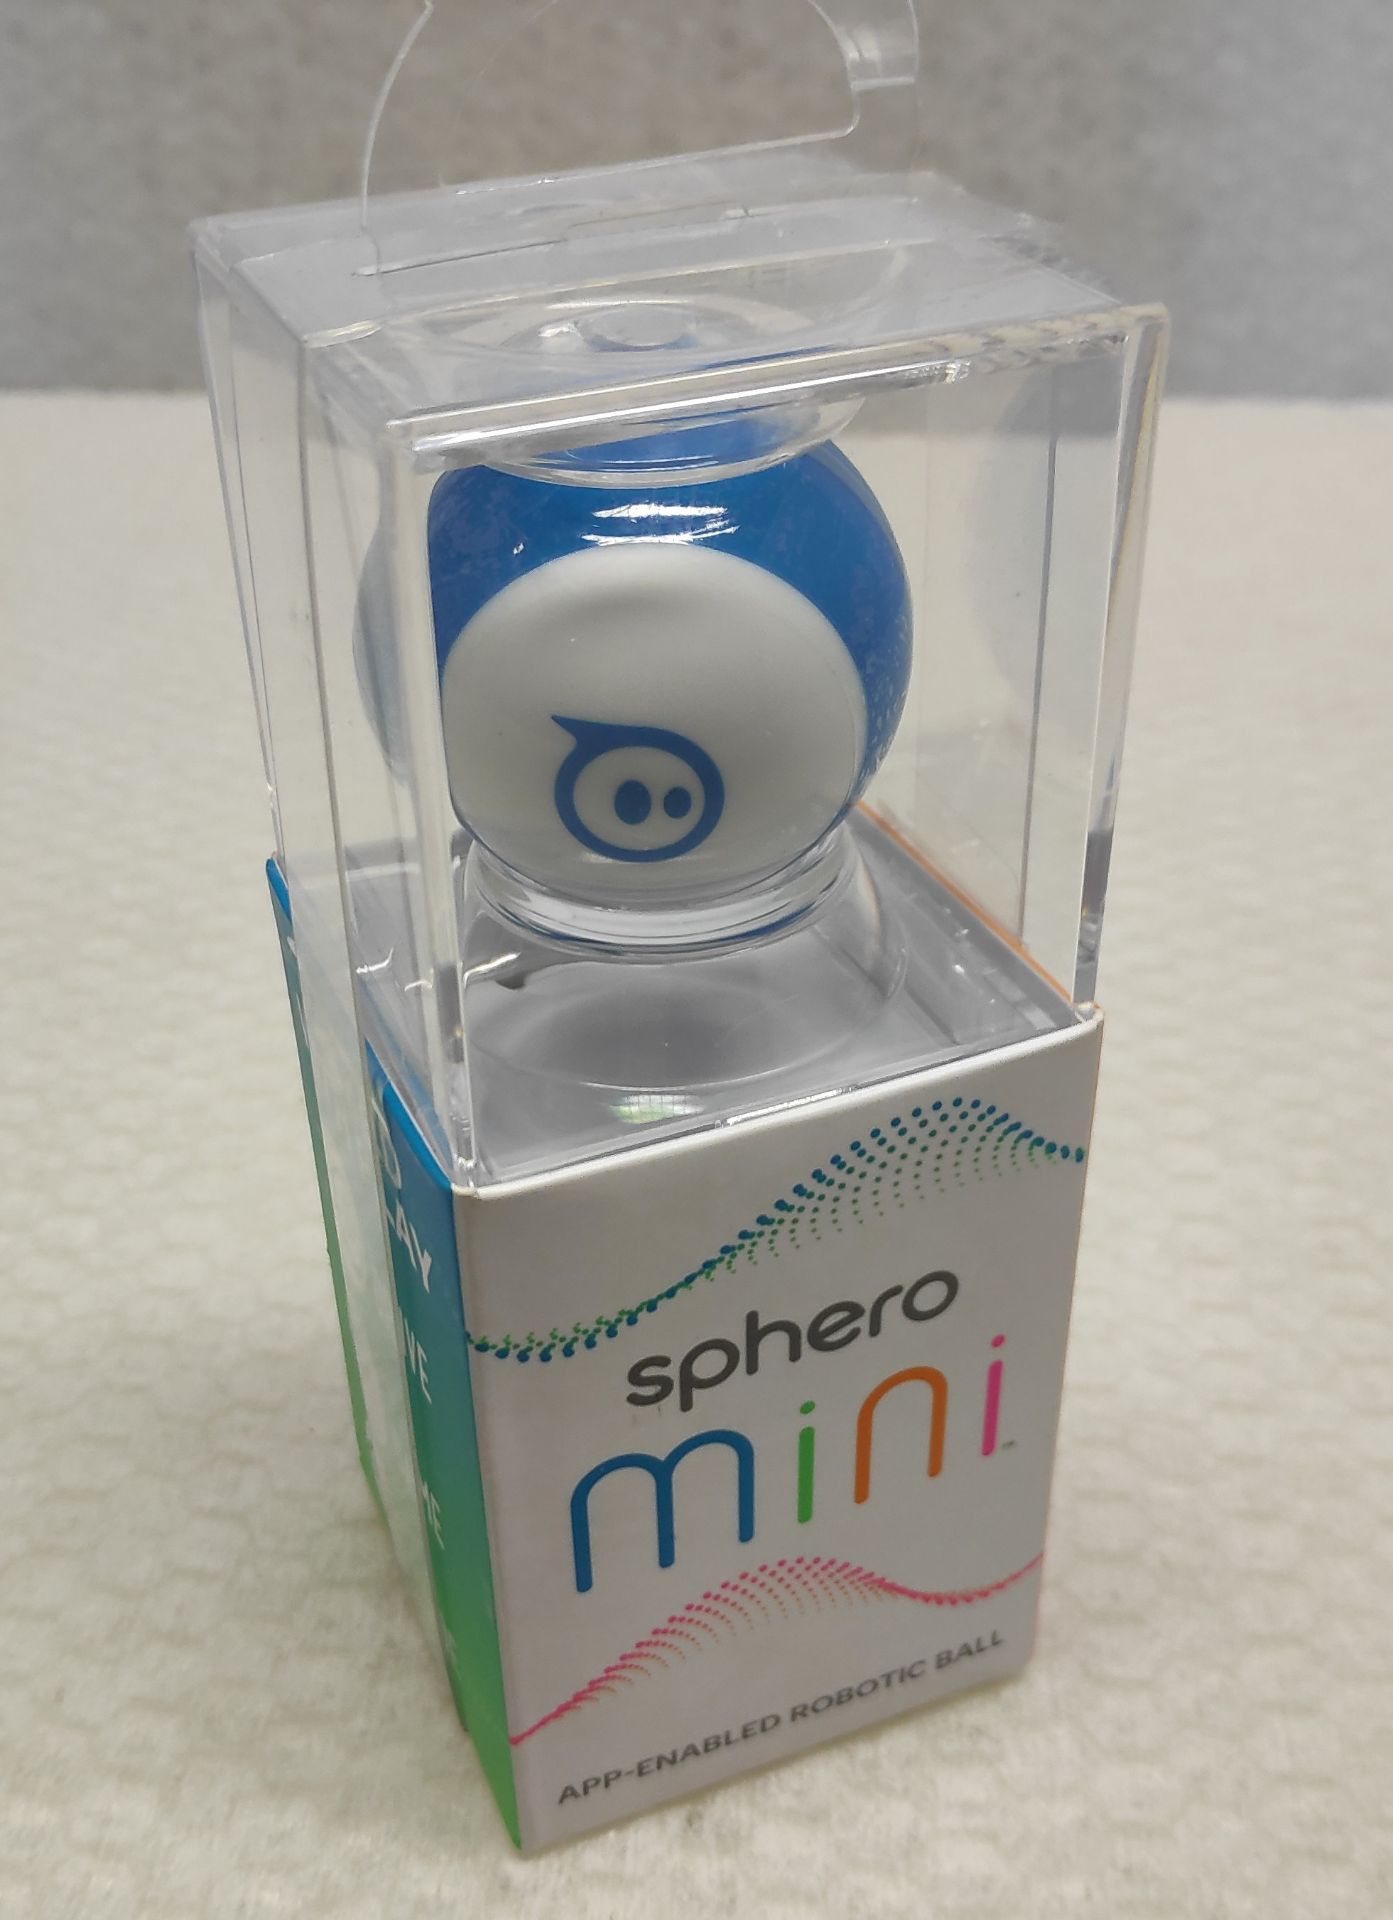 1 x Sphero Mini App-Enabled Robotic Ball - New/Boxed - Image 5 of 5